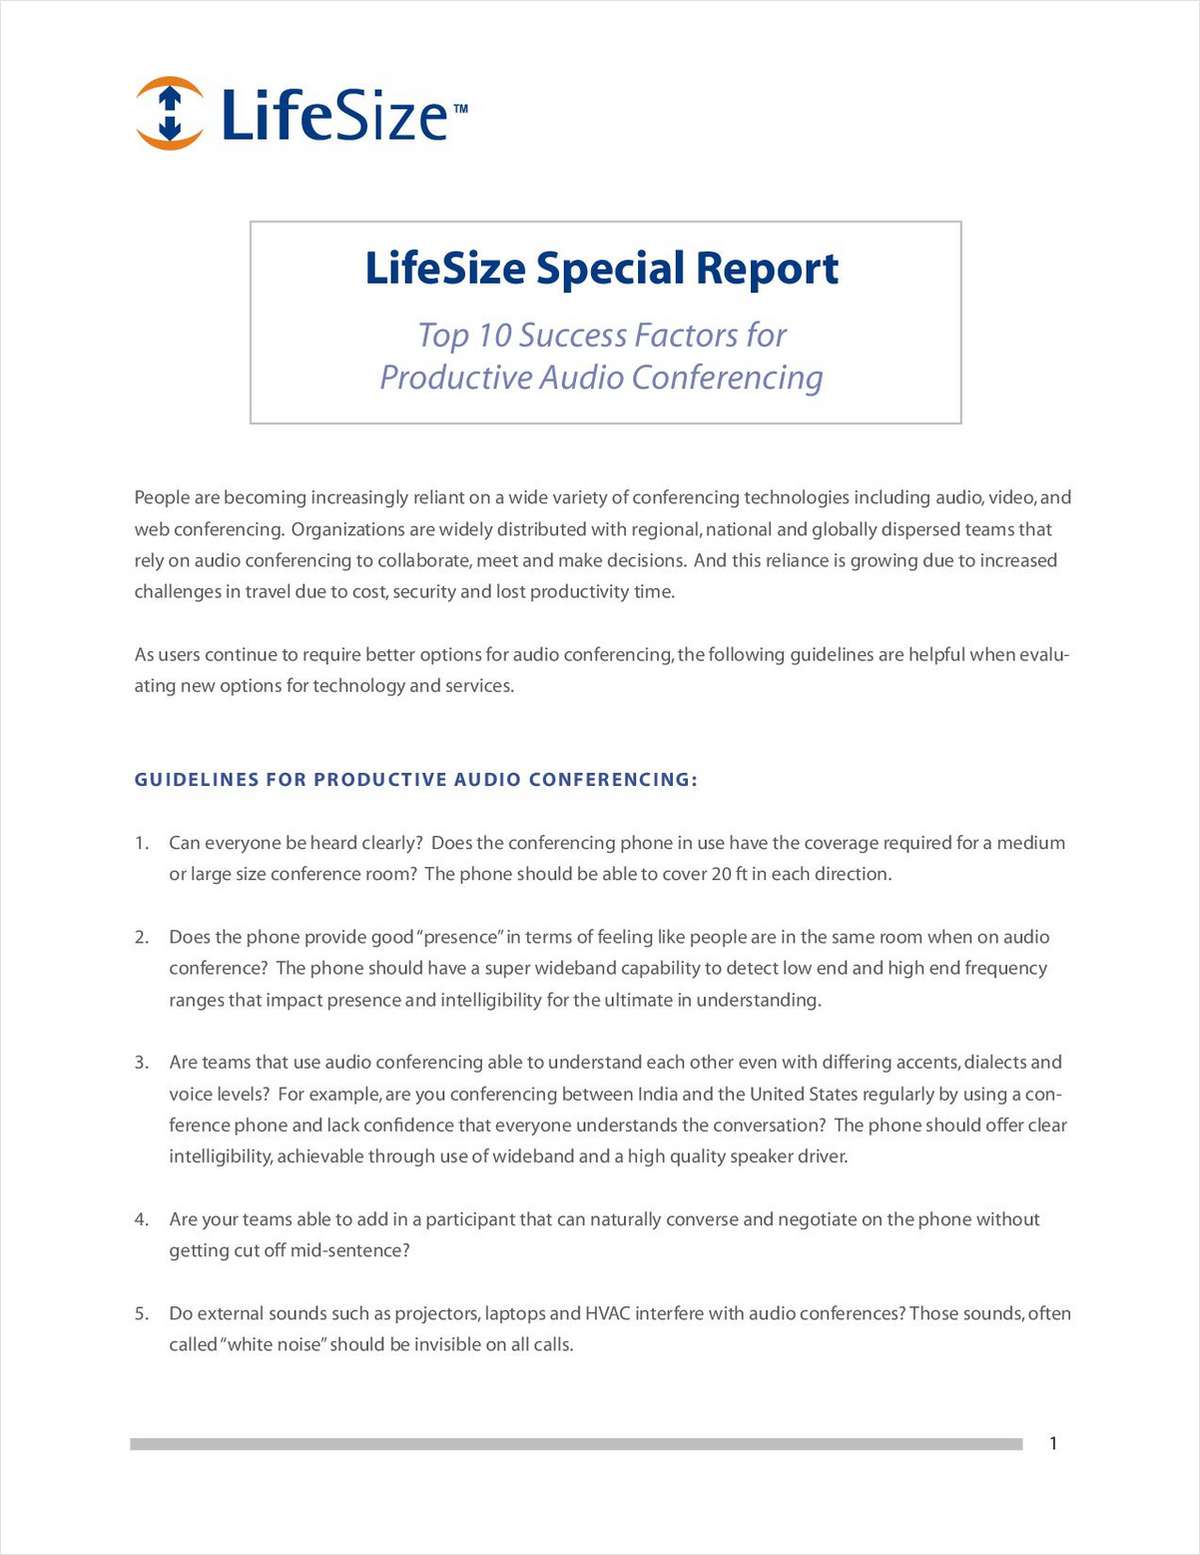 Top 10 Success Factors for Productive Audio Conferencing